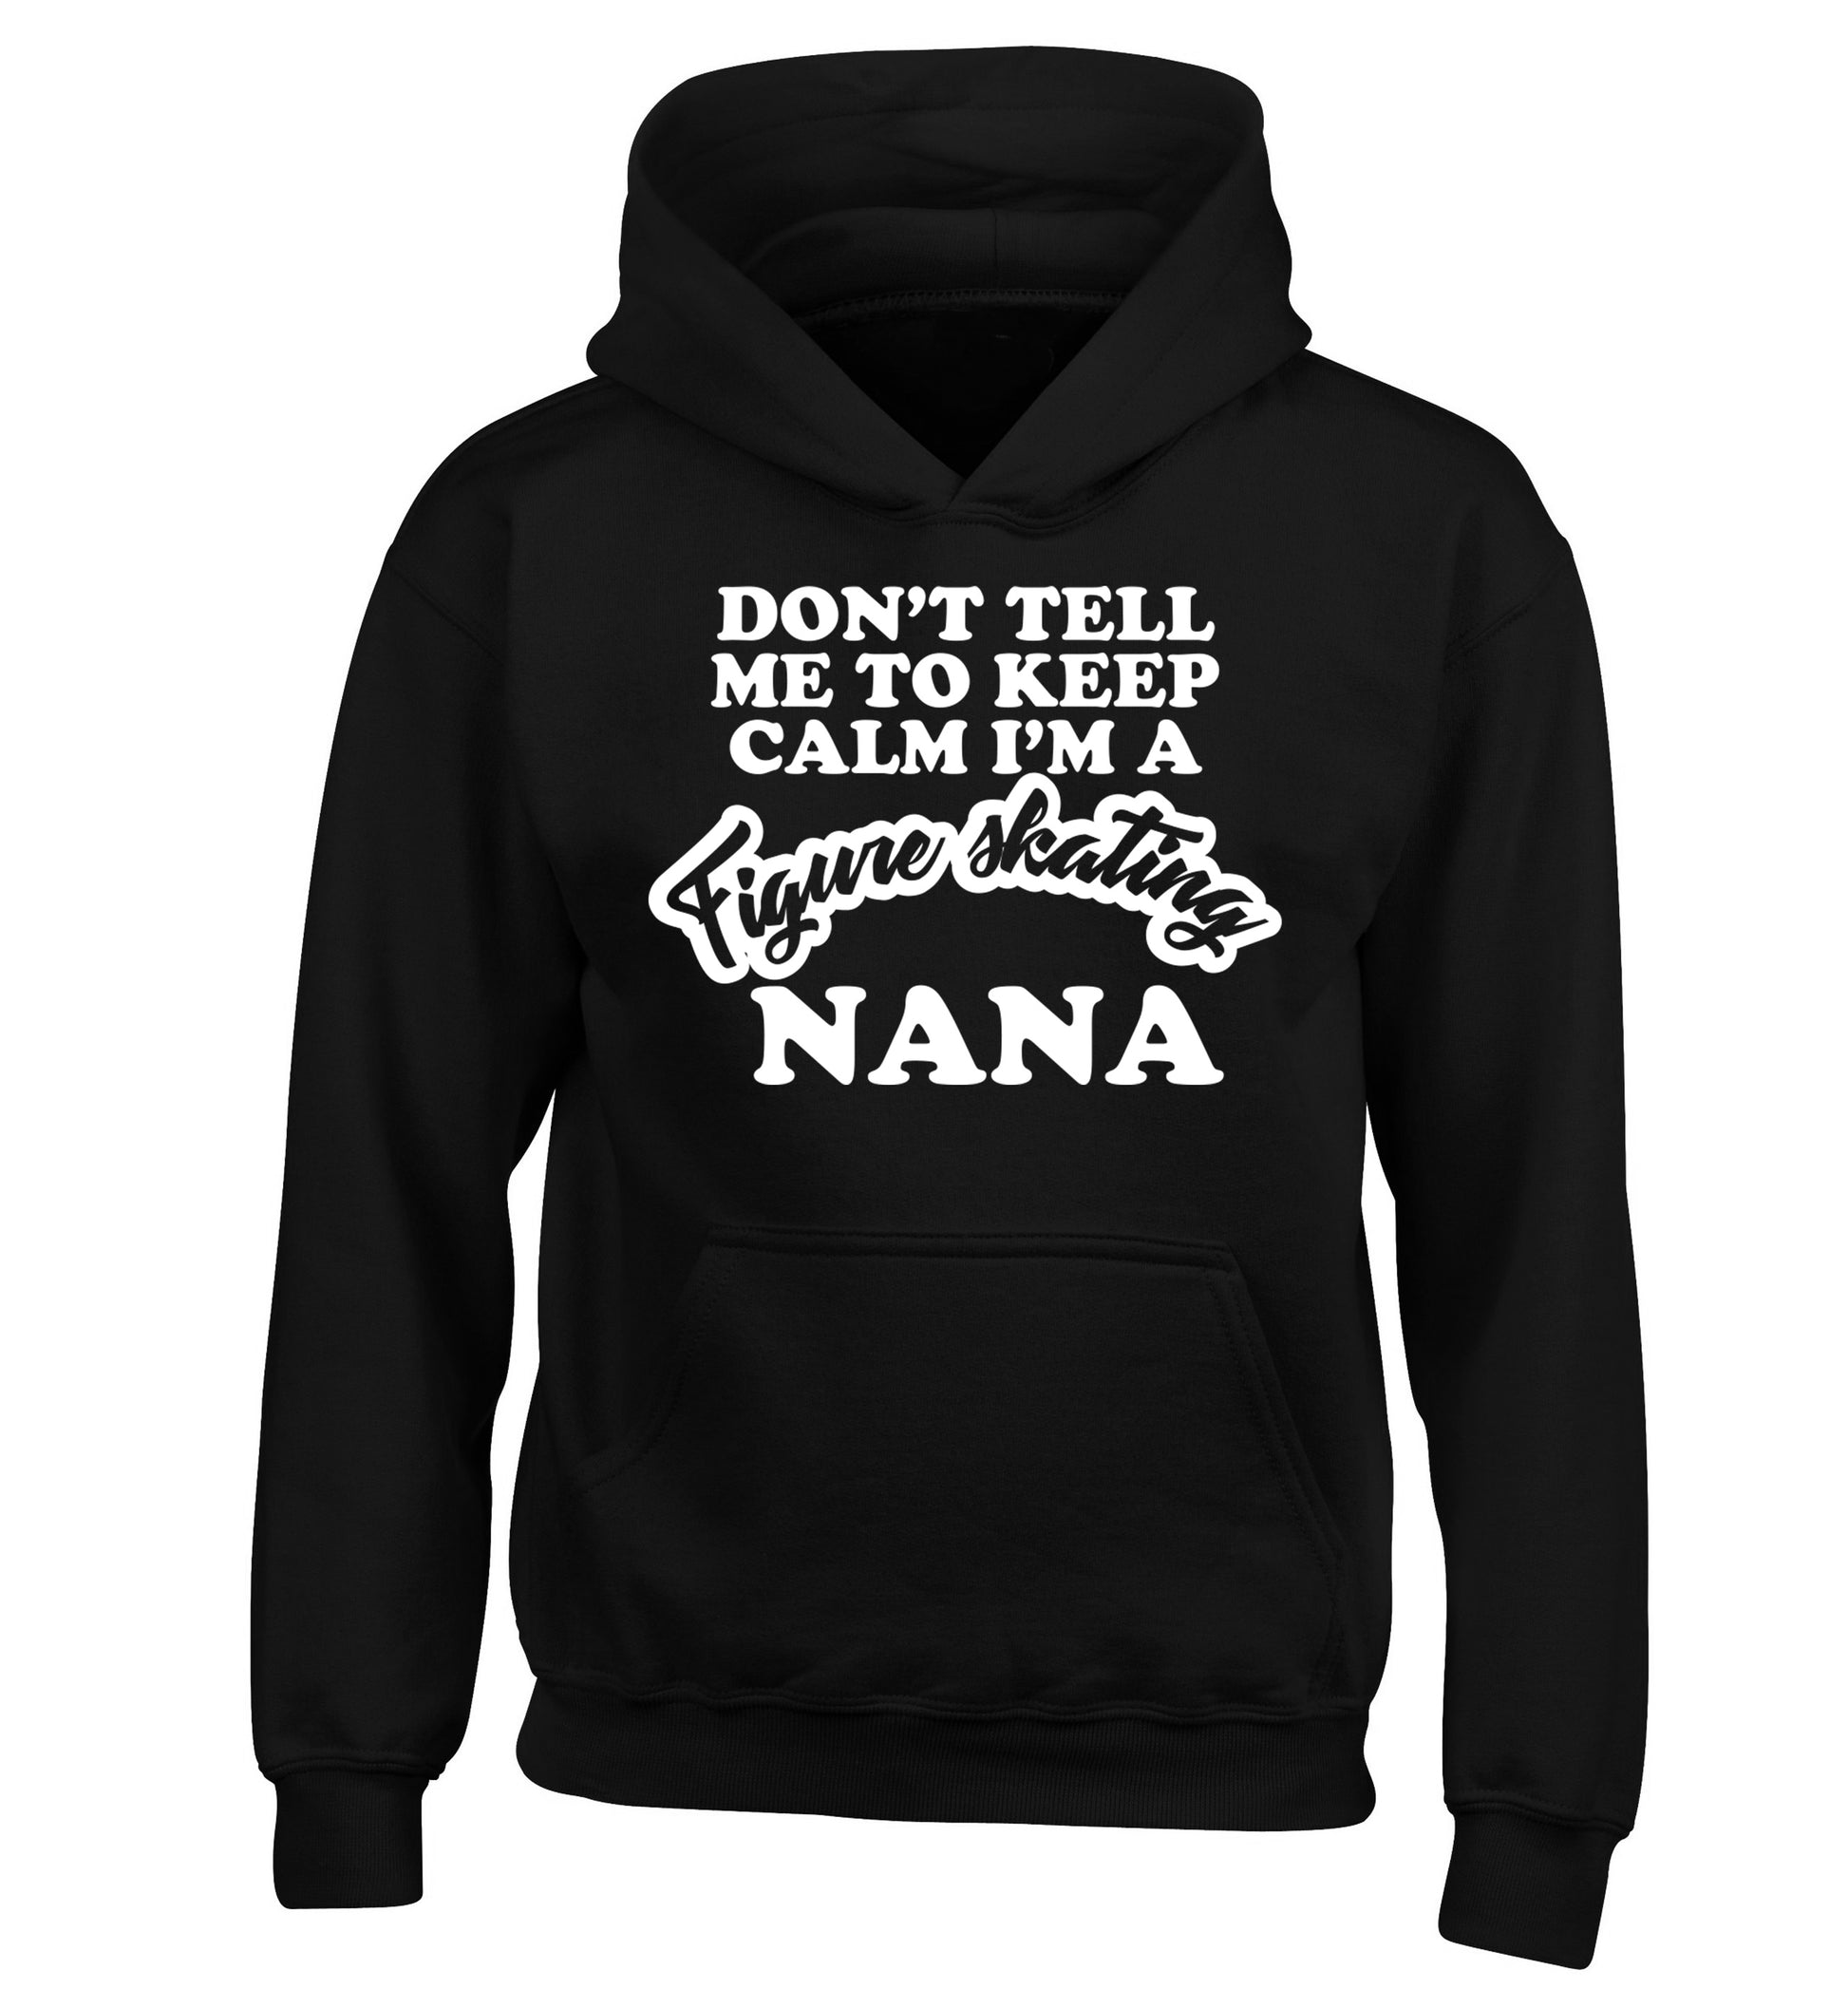 Don't tell me to keep calm I'm a figure skating nana children's black hoodie 12-14 Years